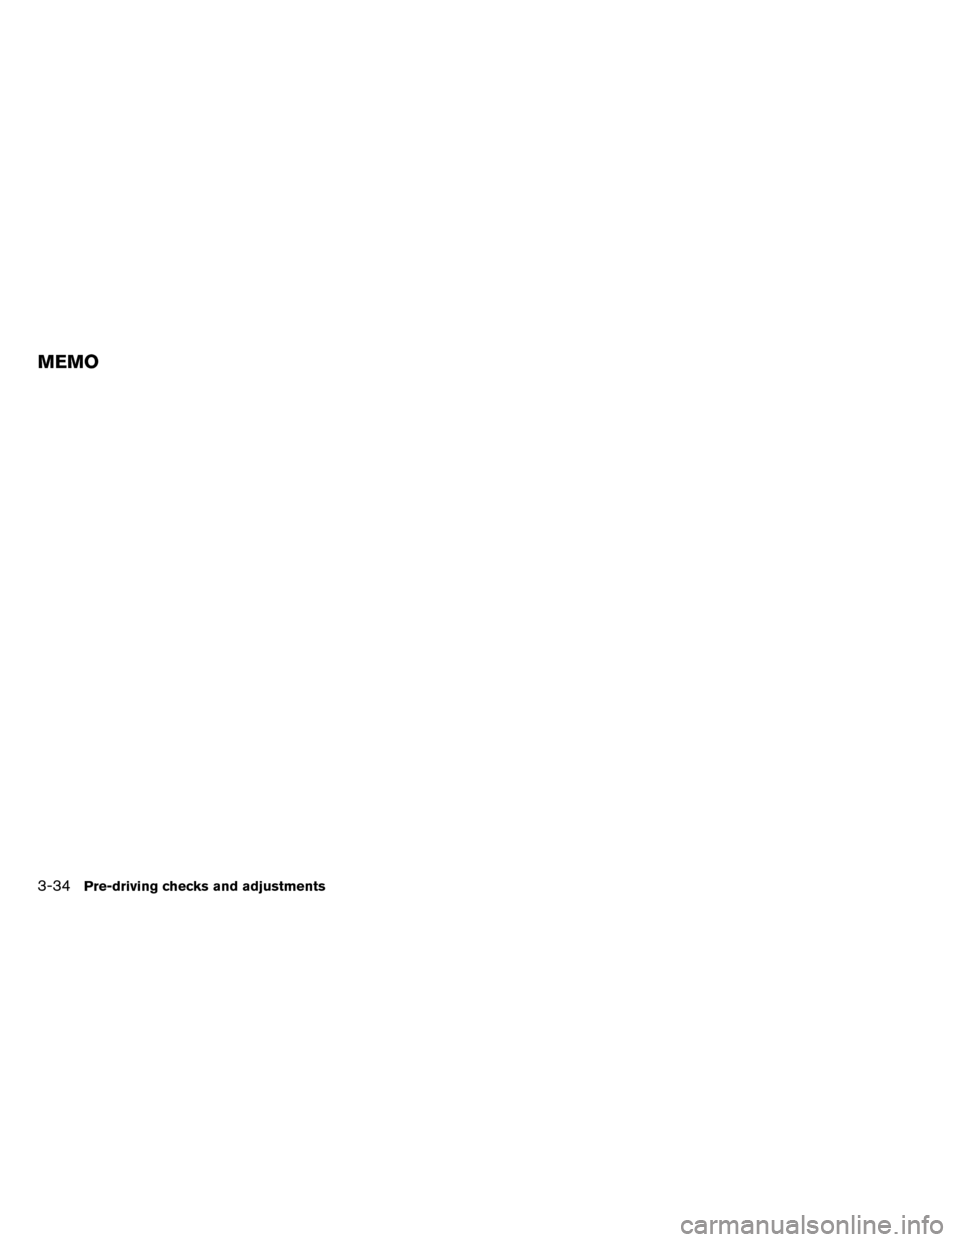 NISSAN ROGUE 2014 2.G Owners Manual MEMO
3-34Pre-driving checks and adjustments 